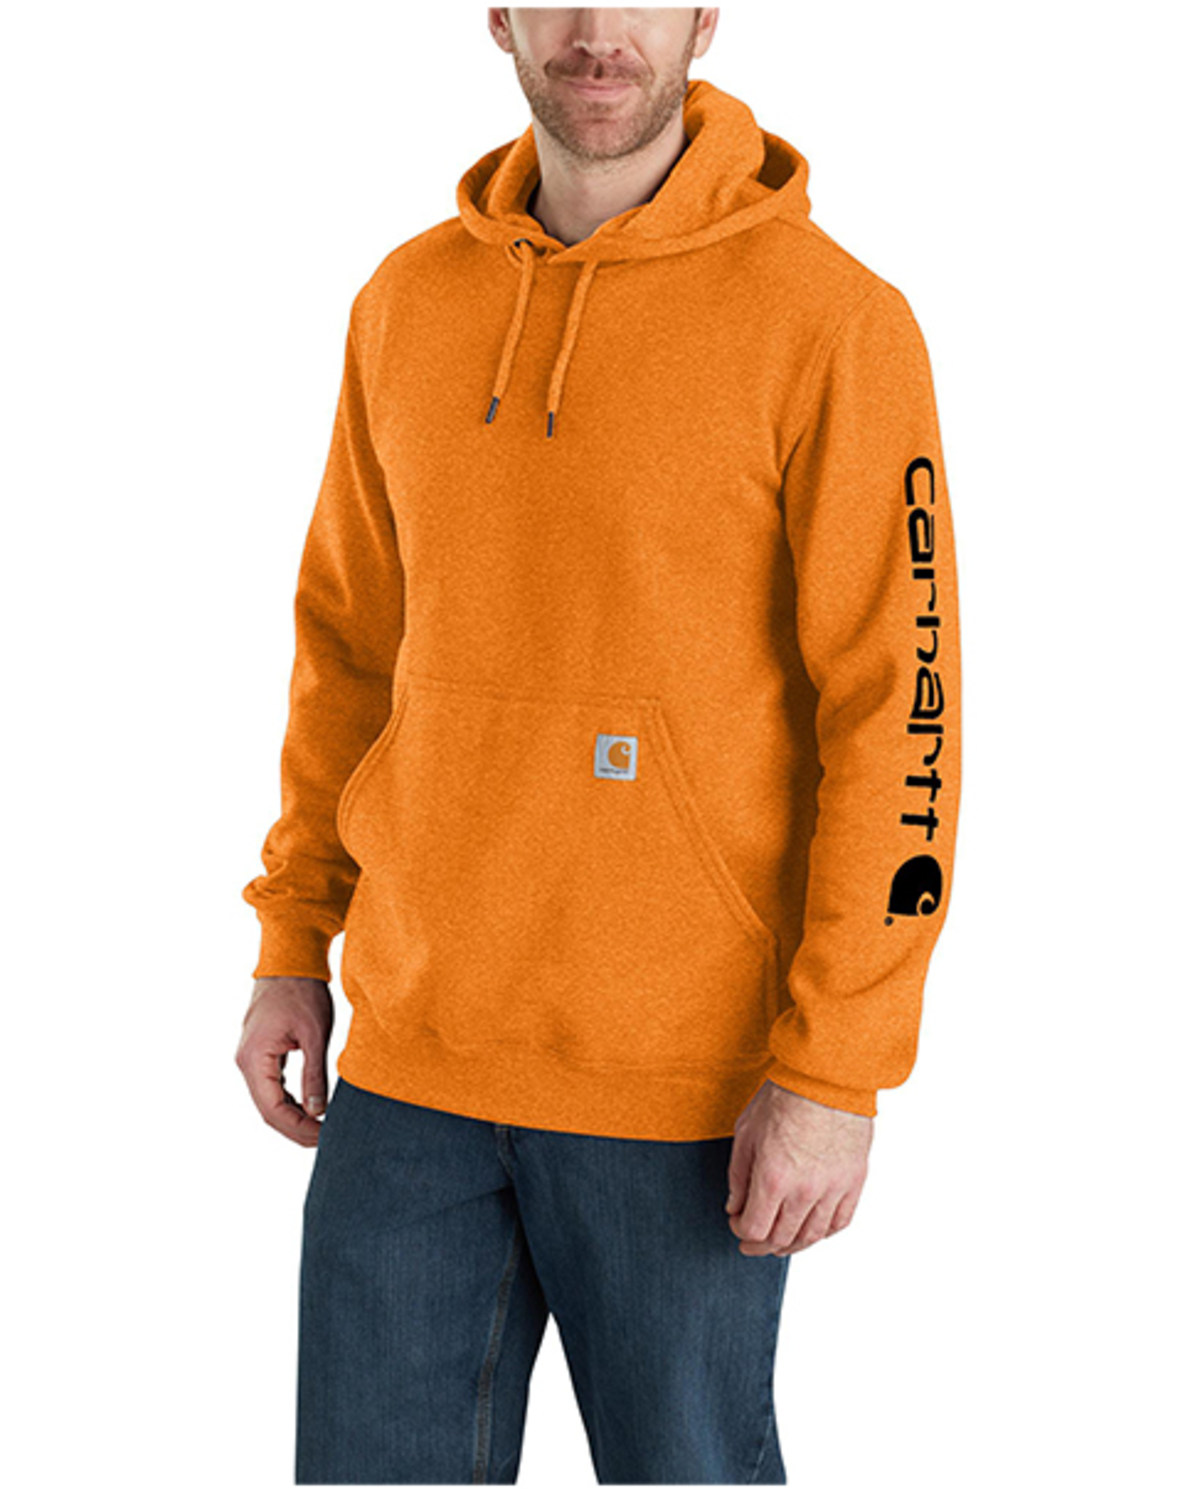 Carhartt Men's Loose Fit Graphic Hooded Work Sweatshirt